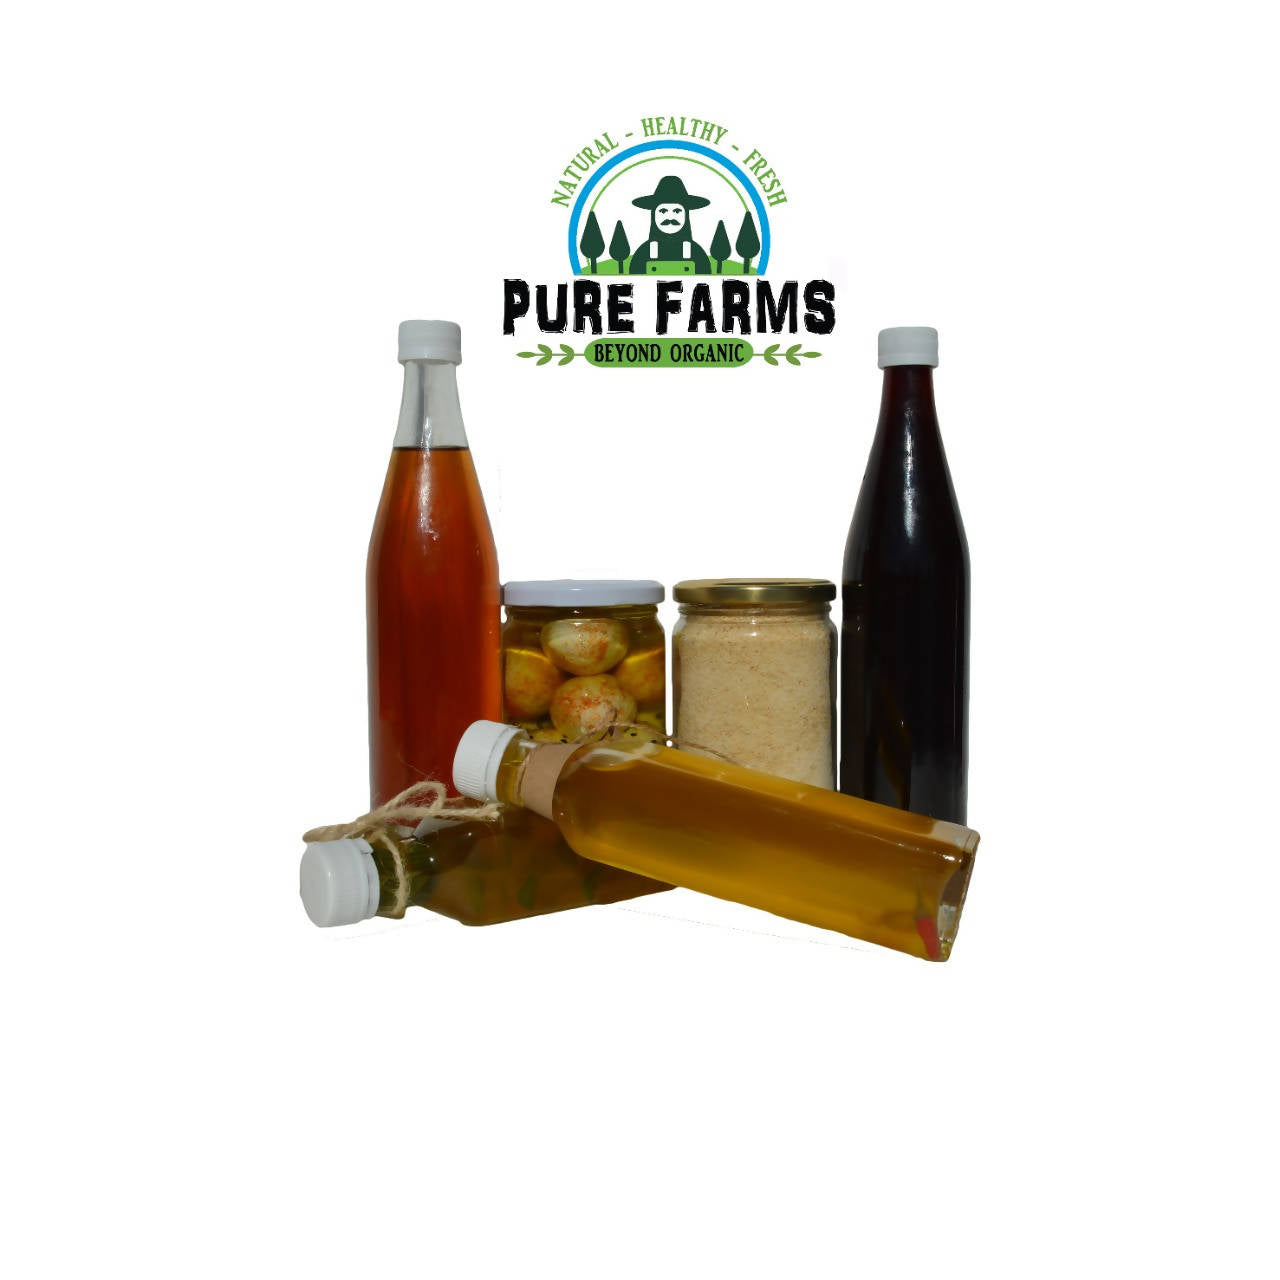 Pure Farms 6 items basket save 10%